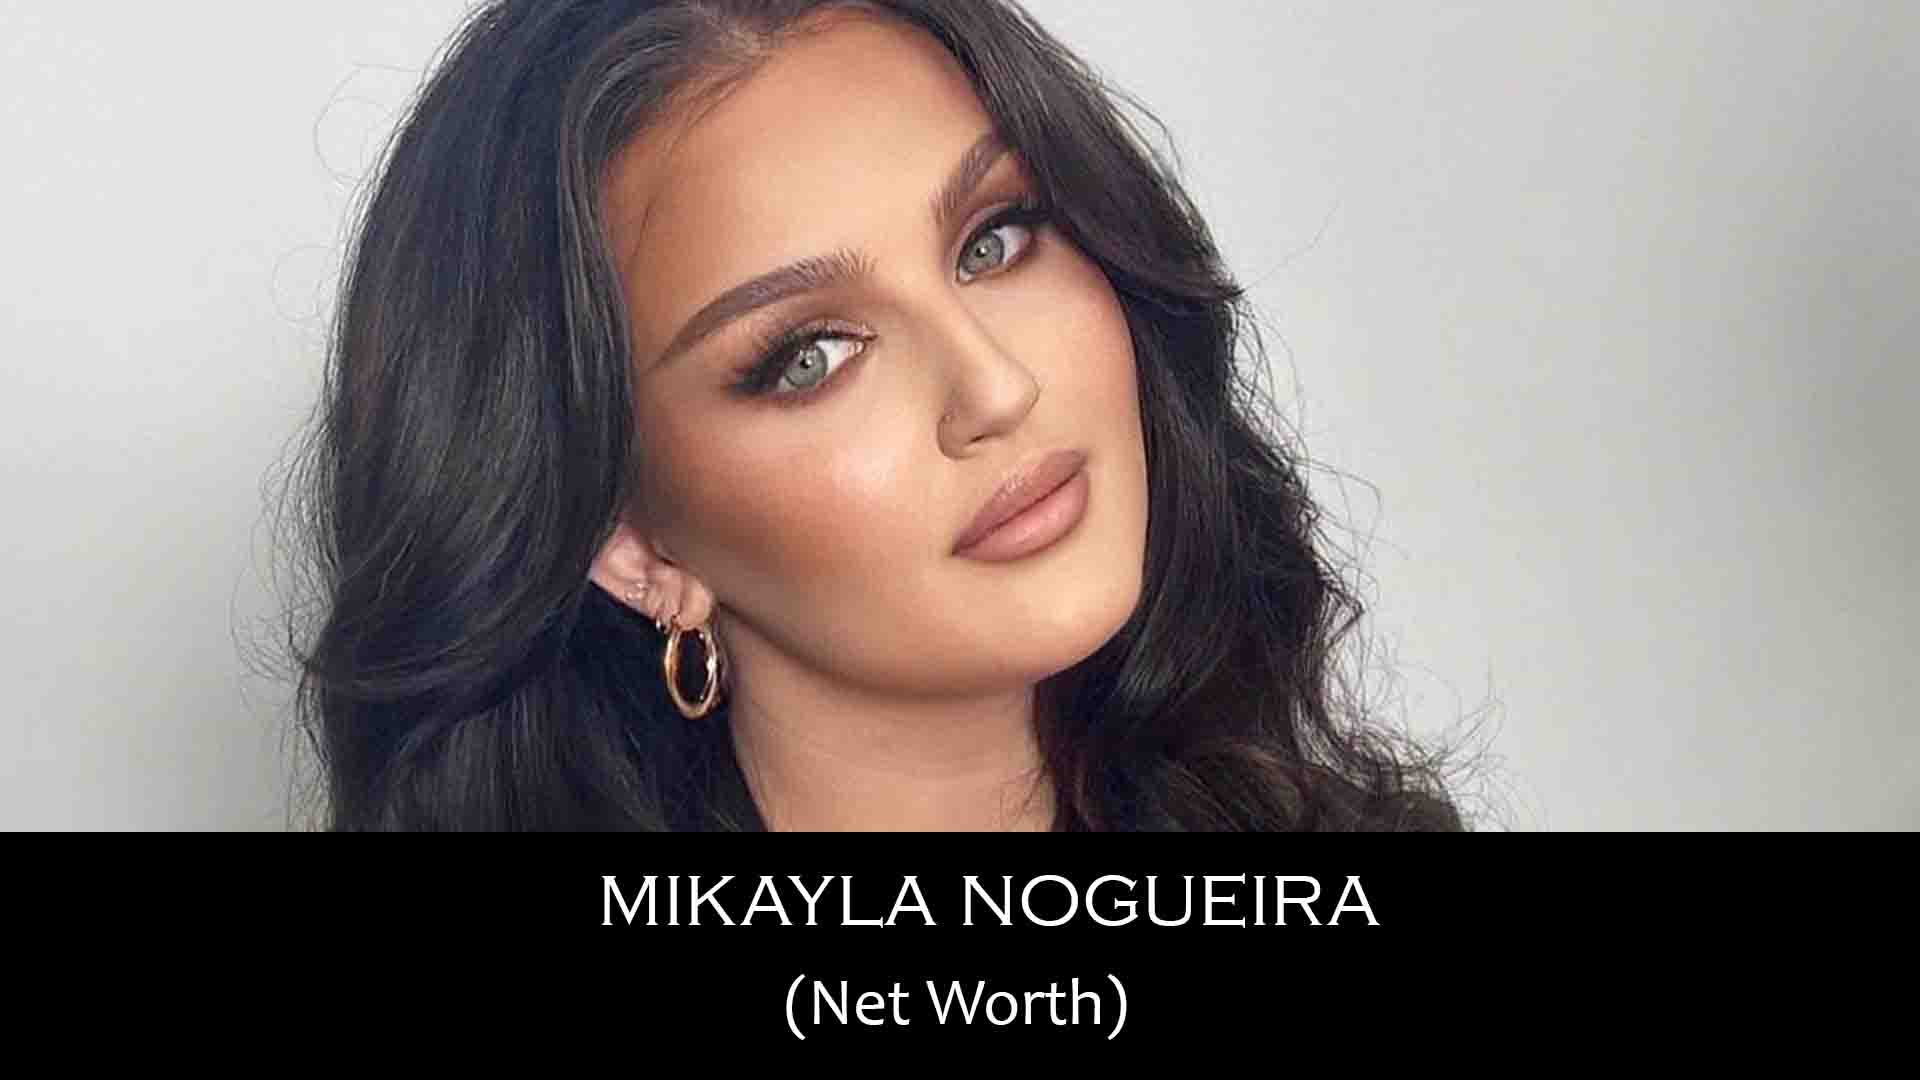 Mikayla Nogueira Net Worth